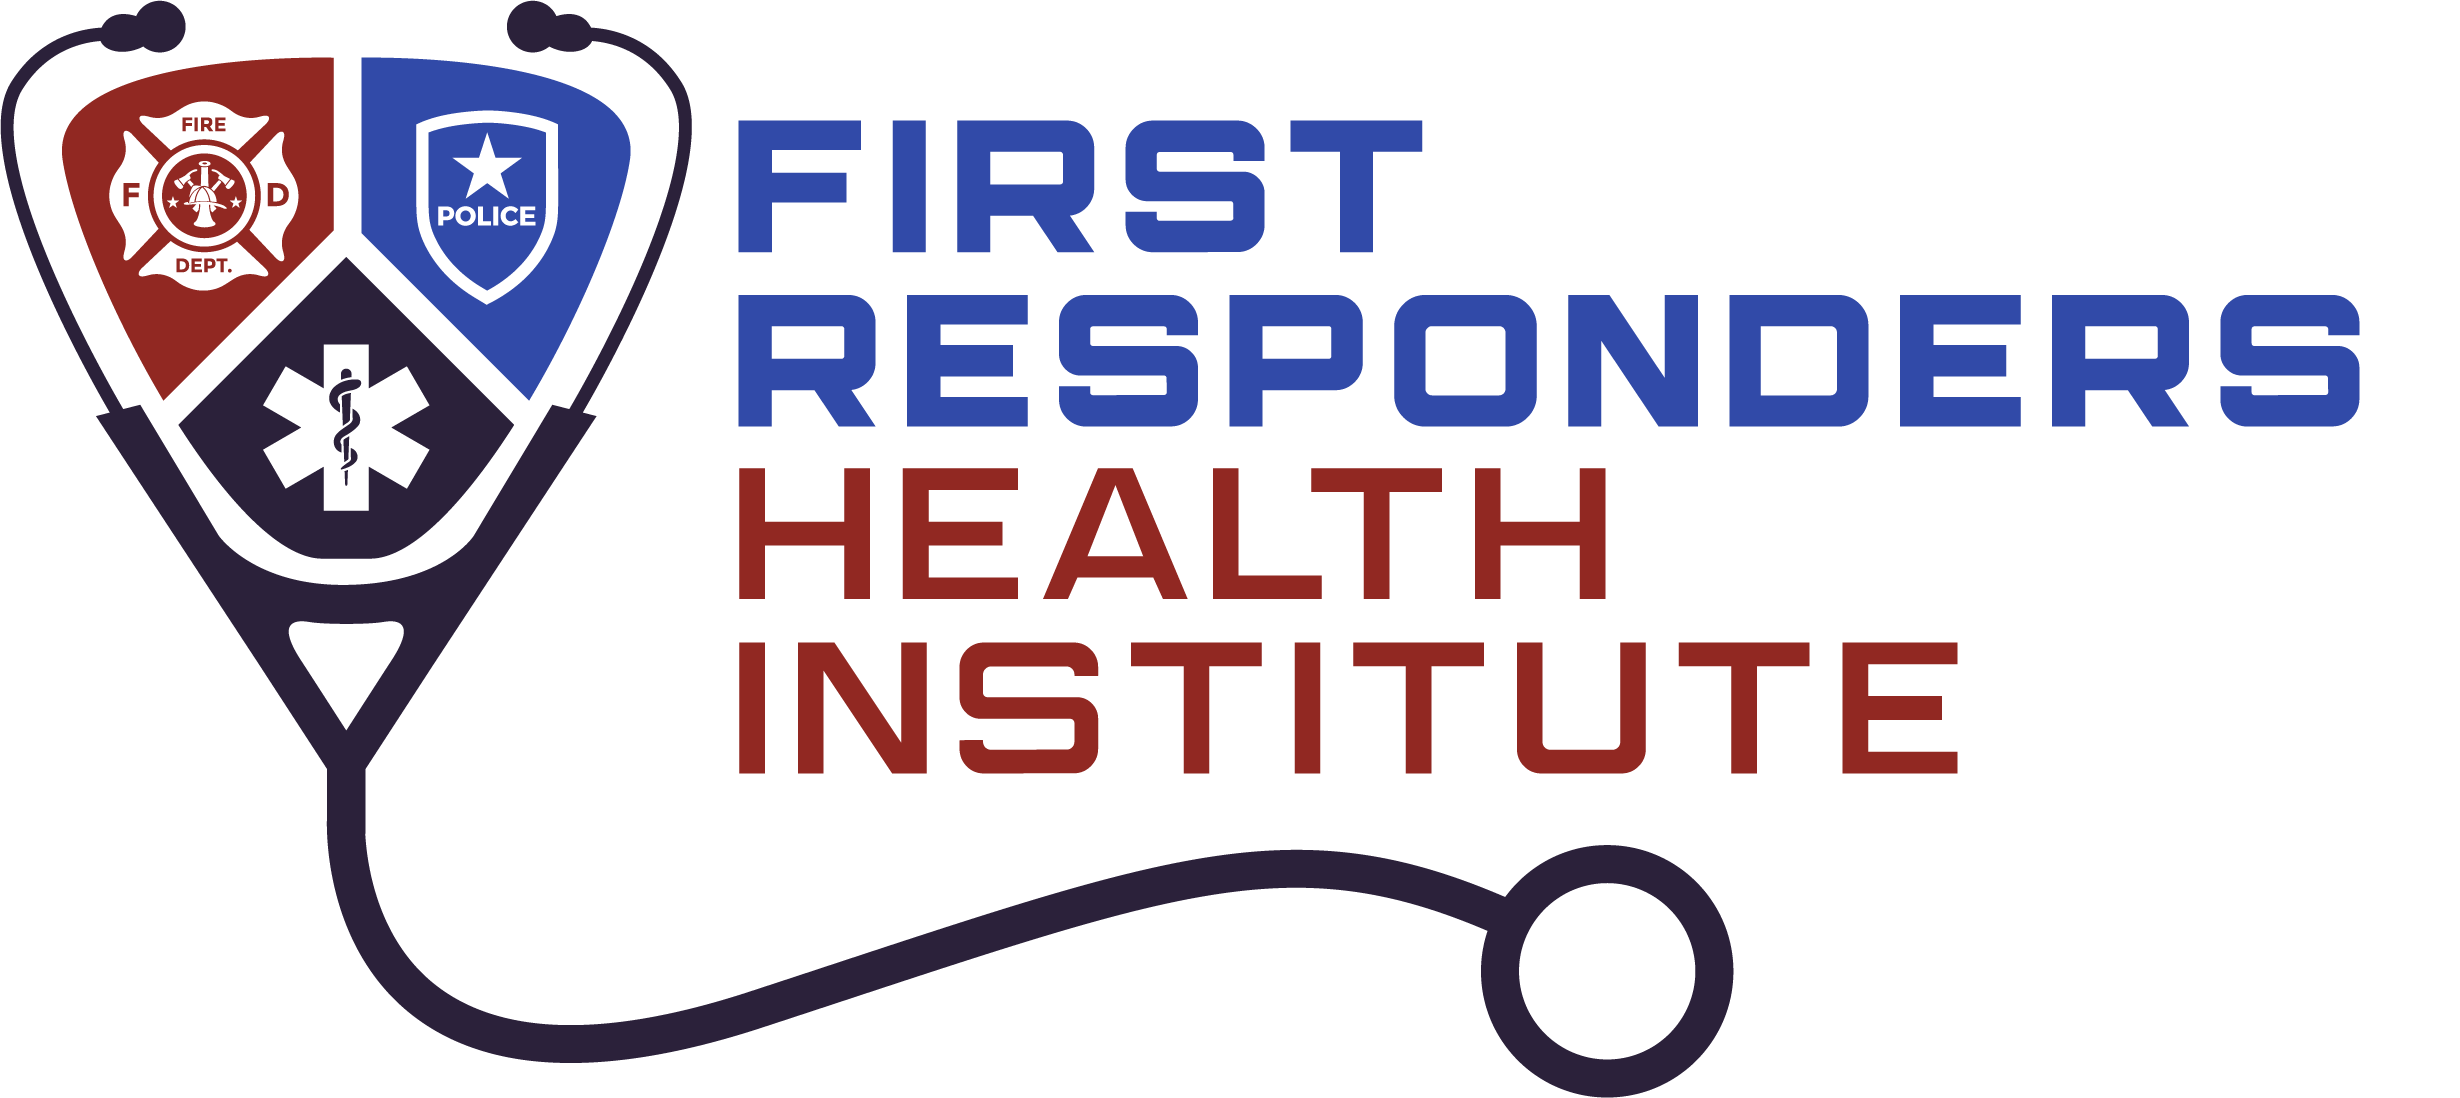 First Responders Health Institute